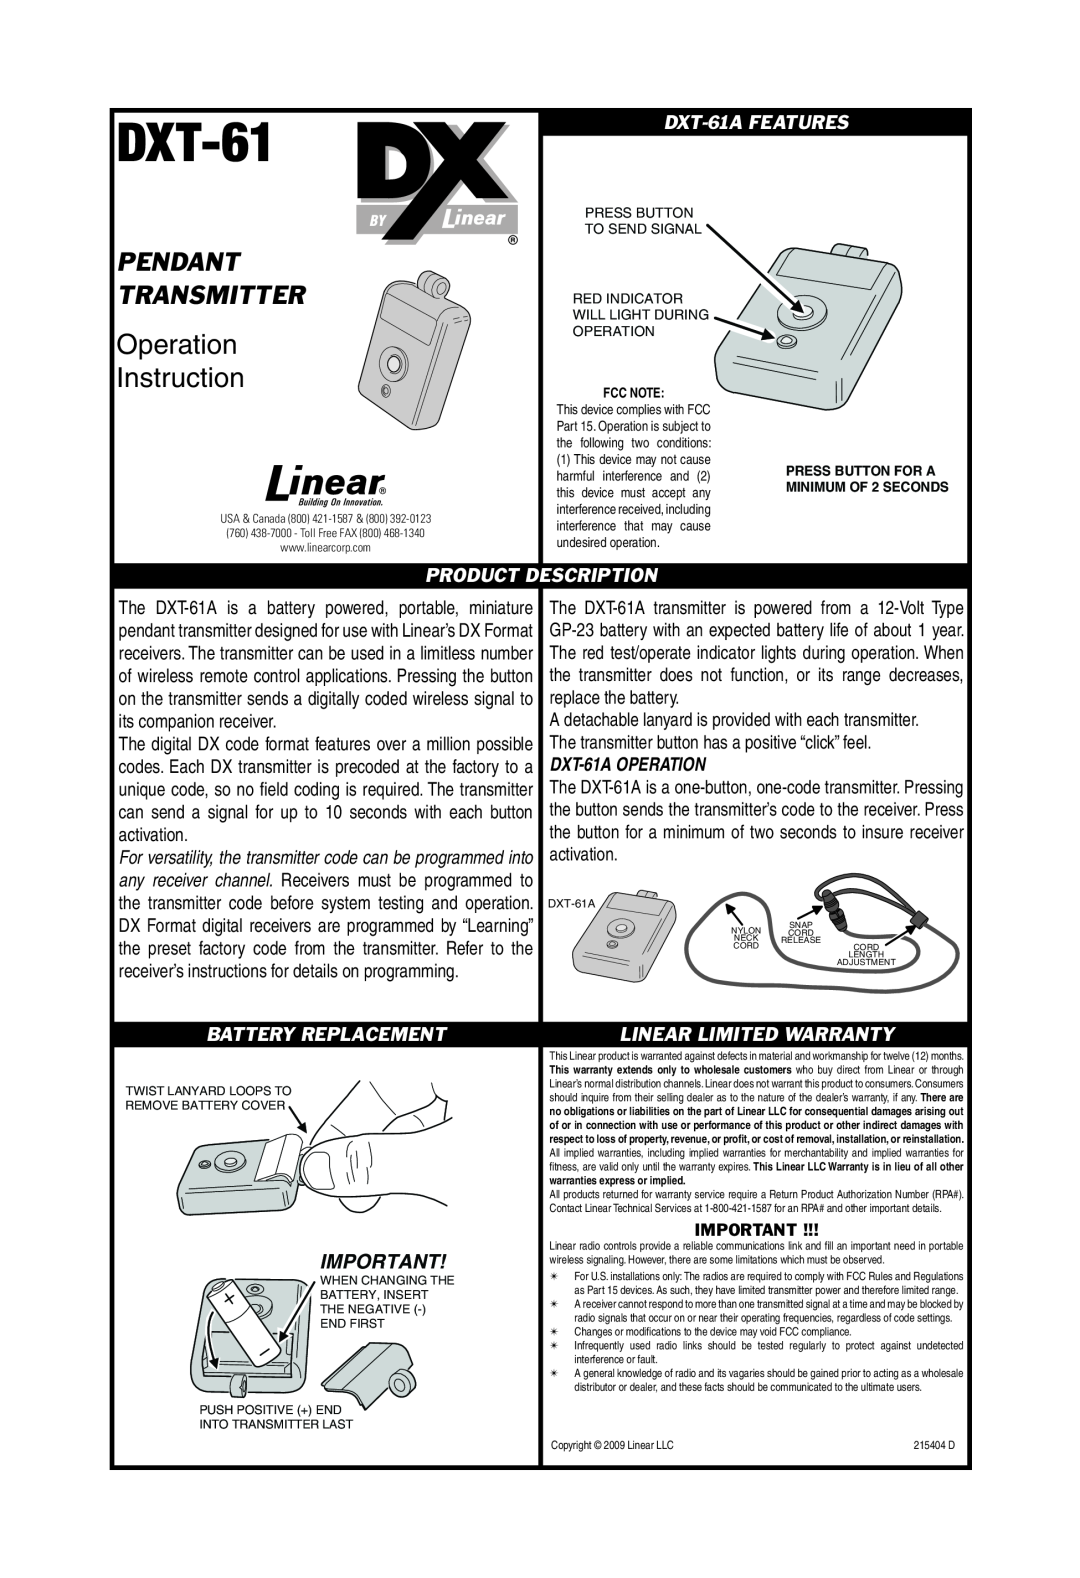 Linear warranty Pendant, Transmitter, Operation, Instruction, Product, Description, DXT-61AFEATURES, DXT-61AOPERATION 